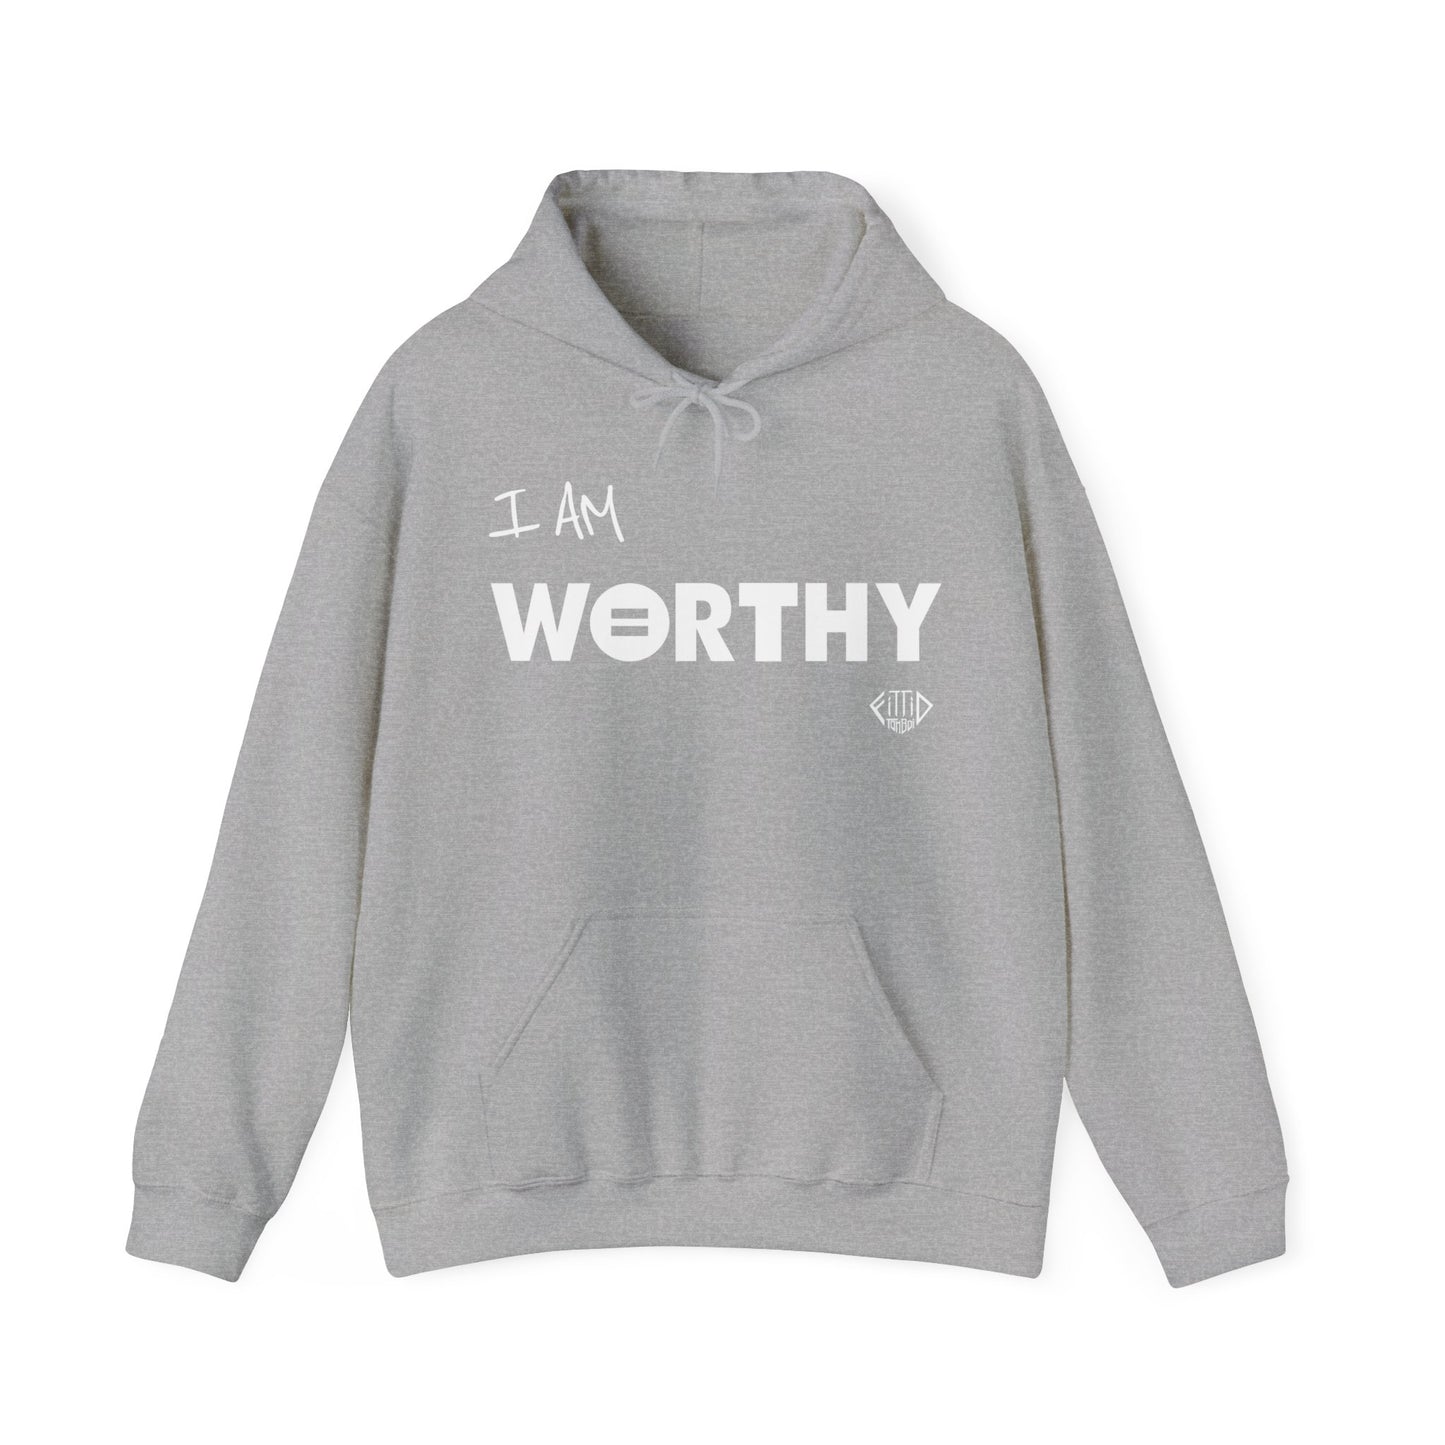 I AM WORTHY Hooded Sweatshirt